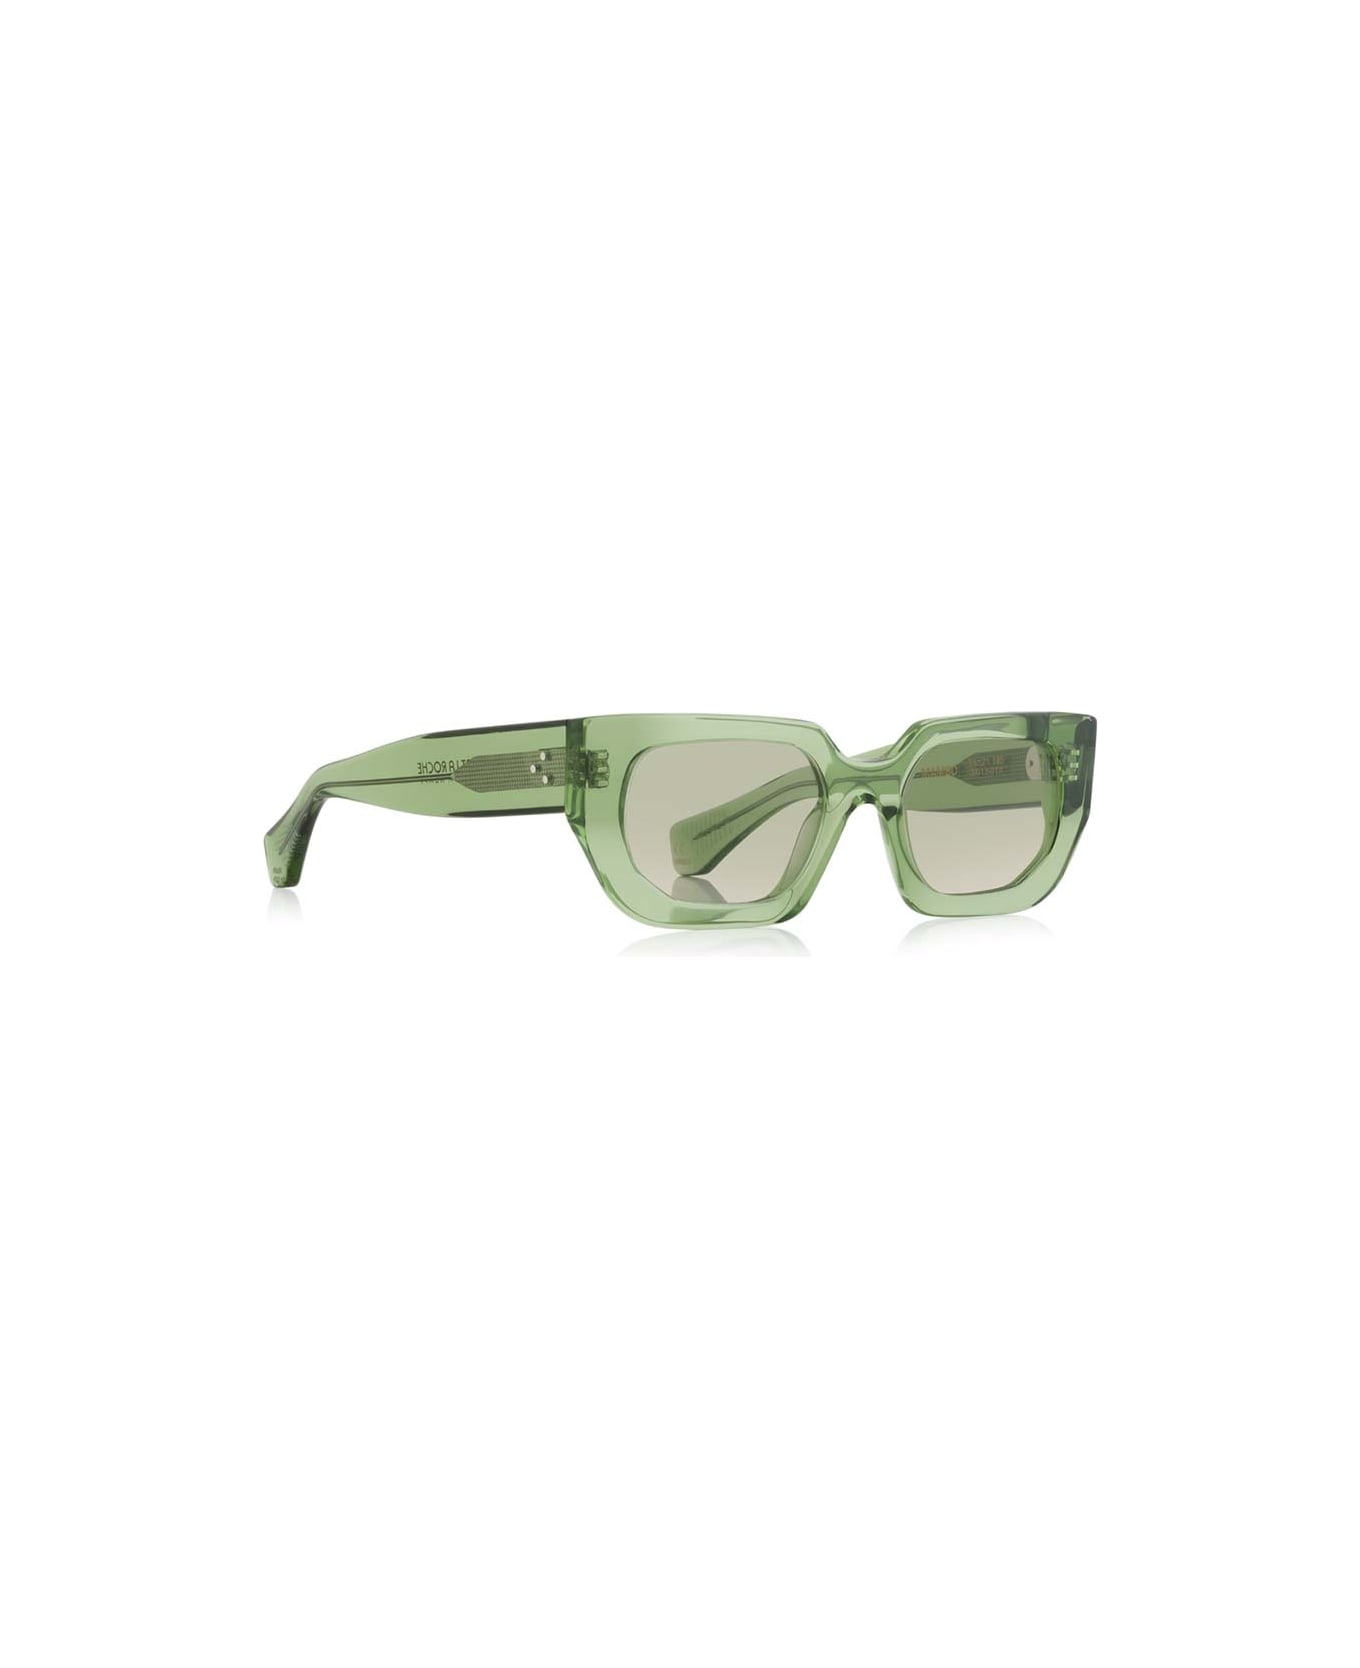 Robert La Roche Sunglasses - Verde/Grigio サングラス